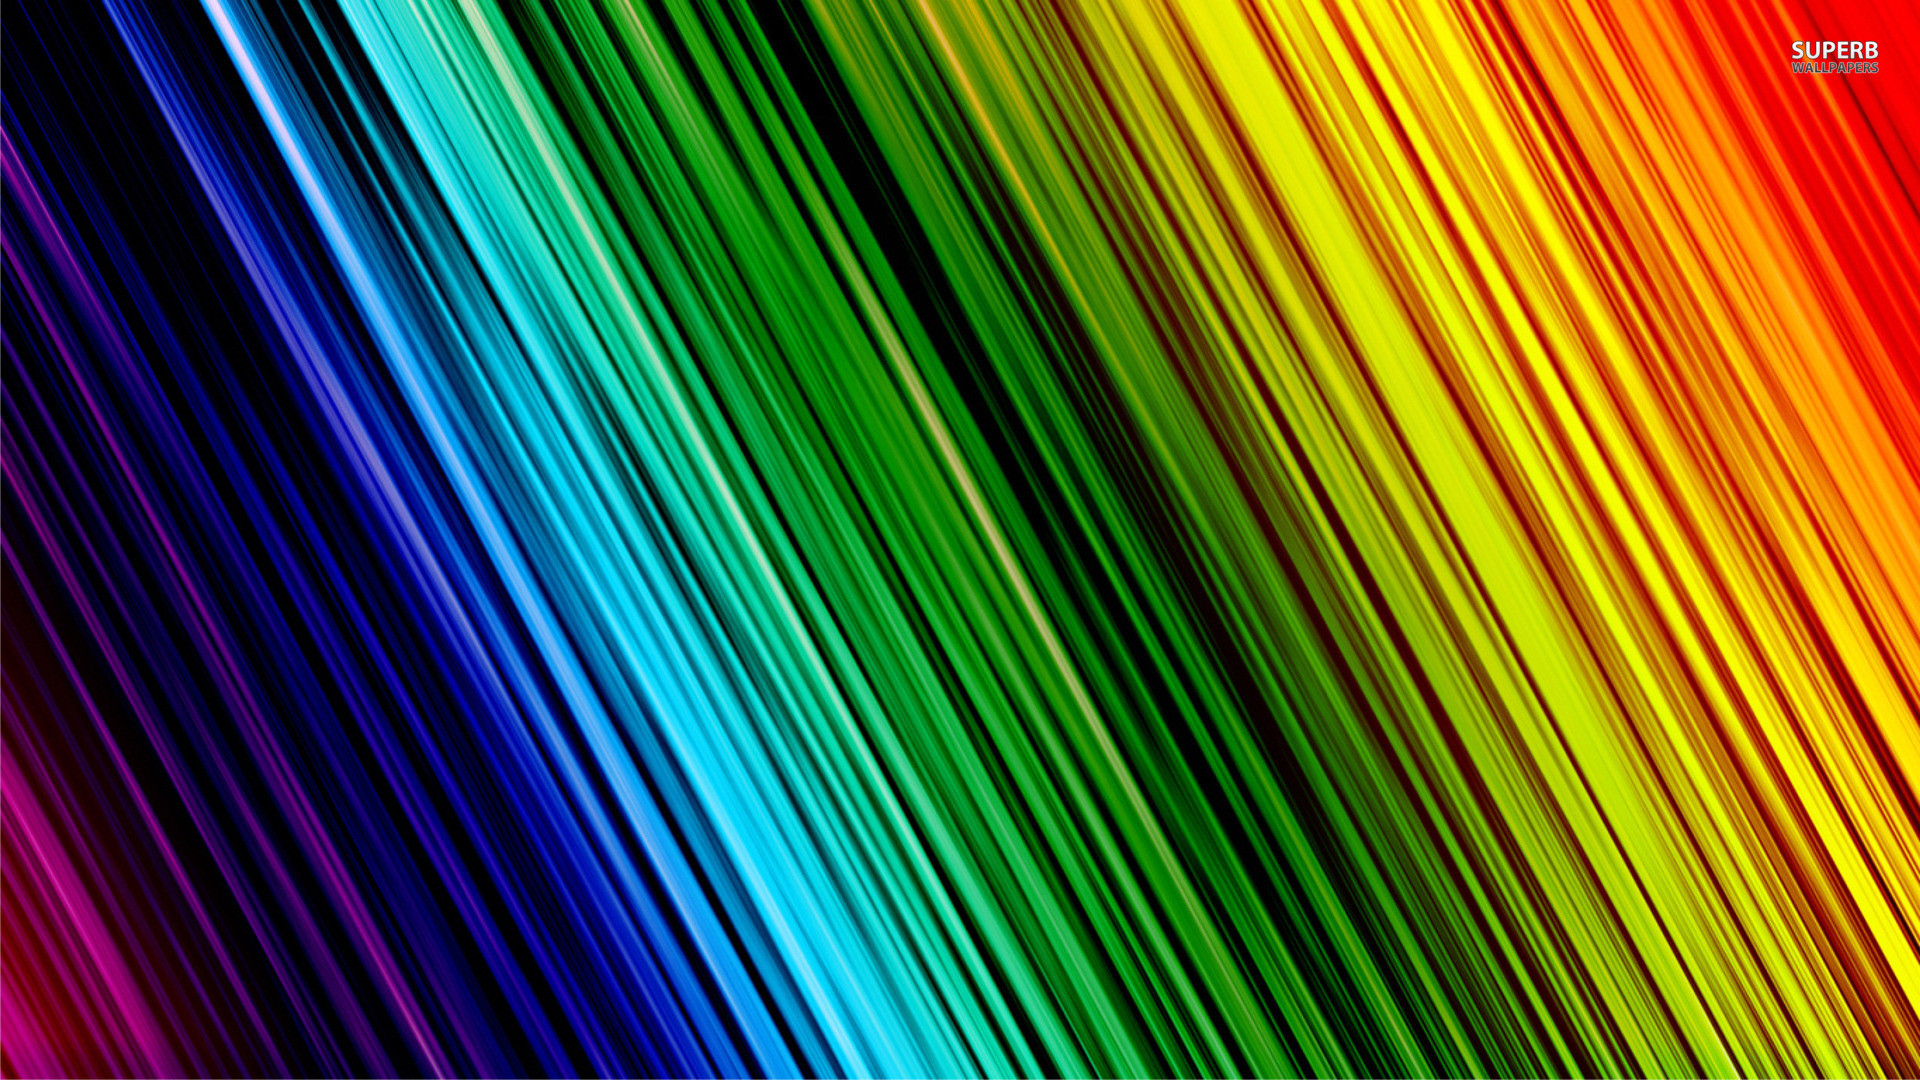 Diagonal striped rainbow image backgrounds